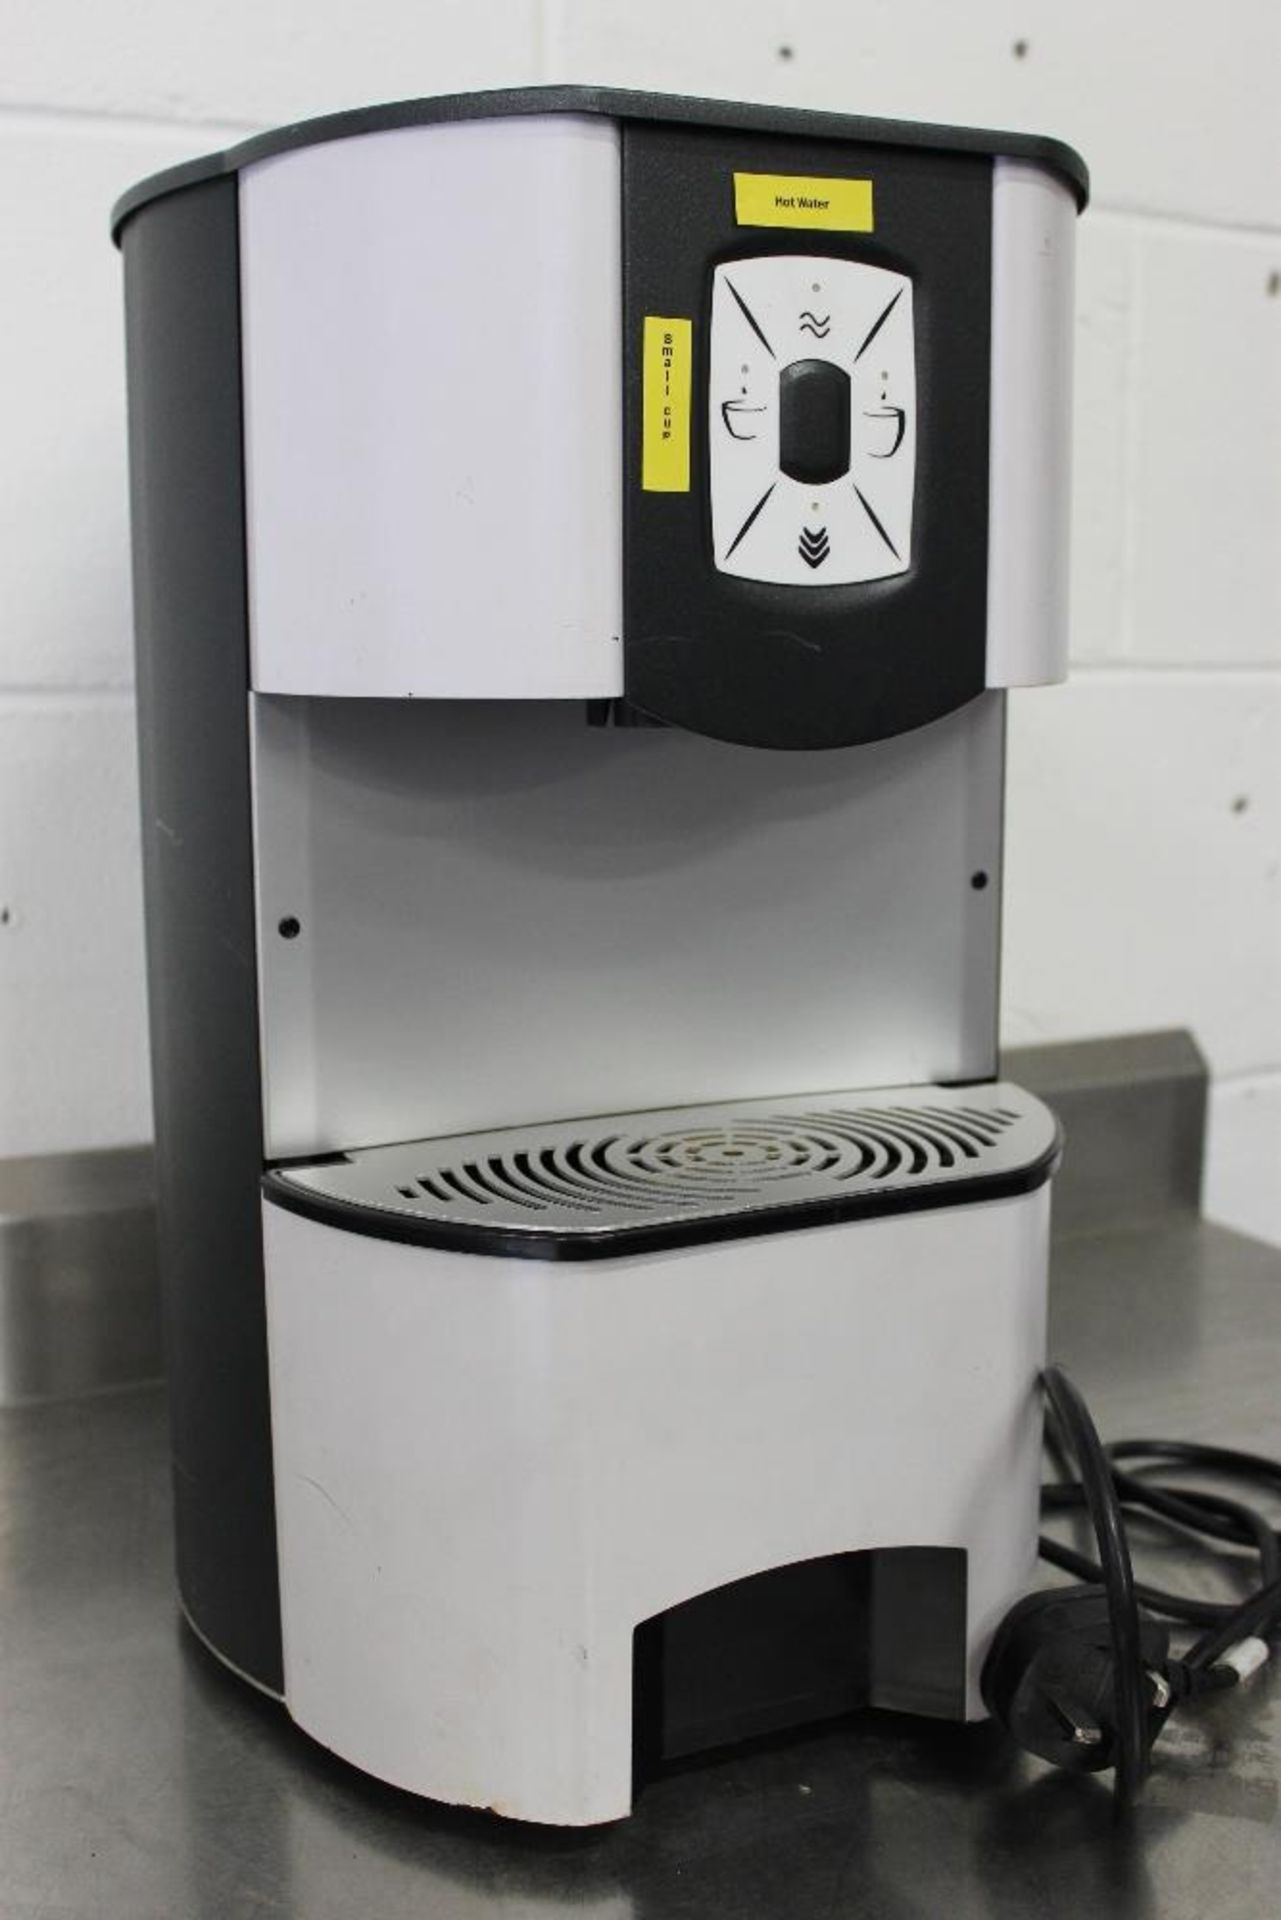 Facotech Pod Coffee Machine -1ph – Tested Working